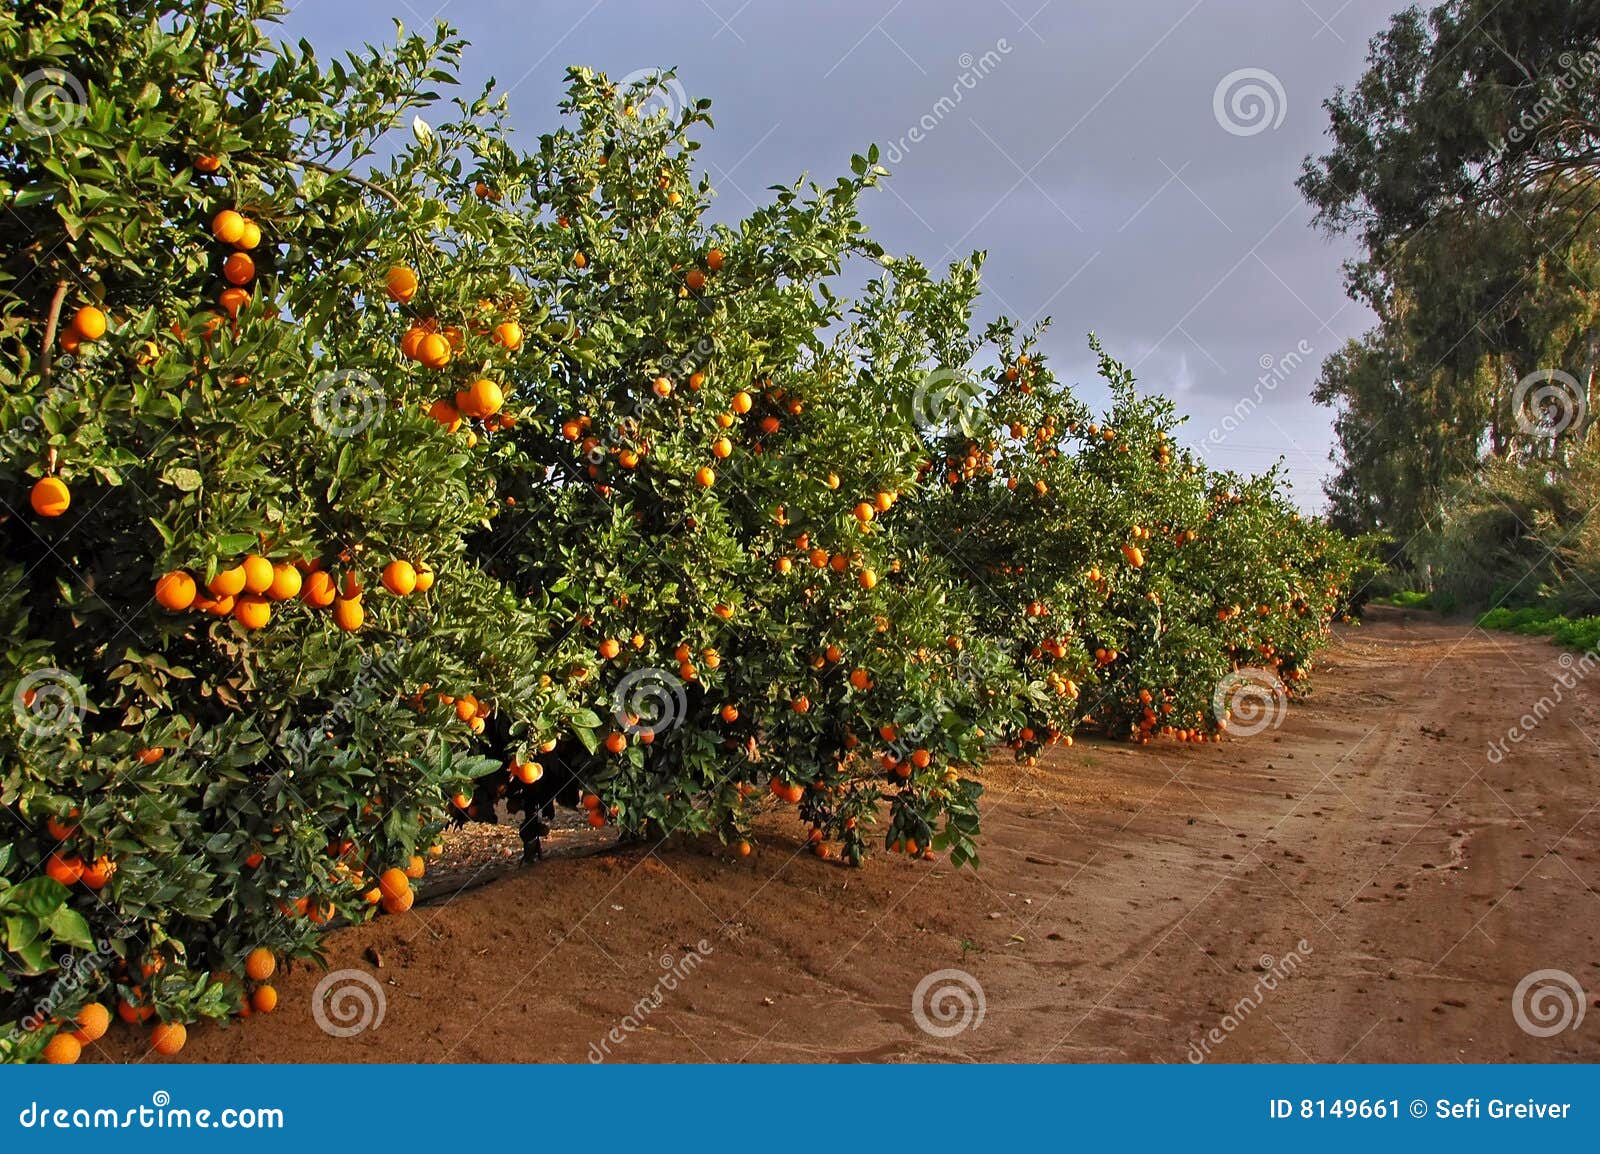 road with many orange trees